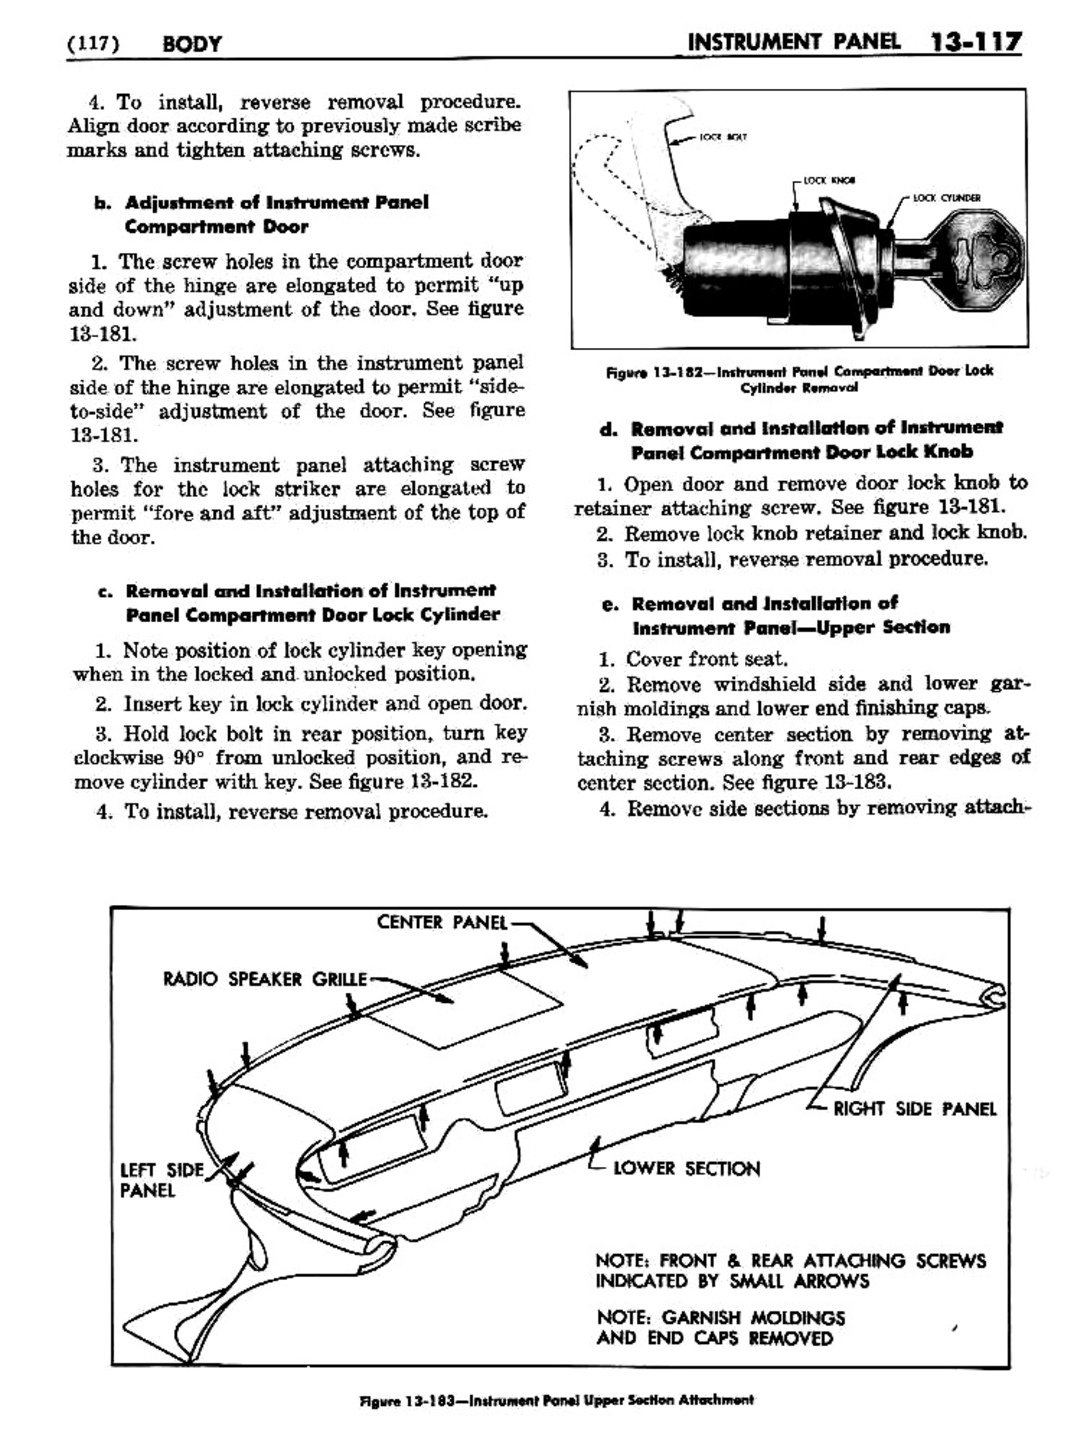 n_1957 Buick Body Service Manual-119-119.jpg